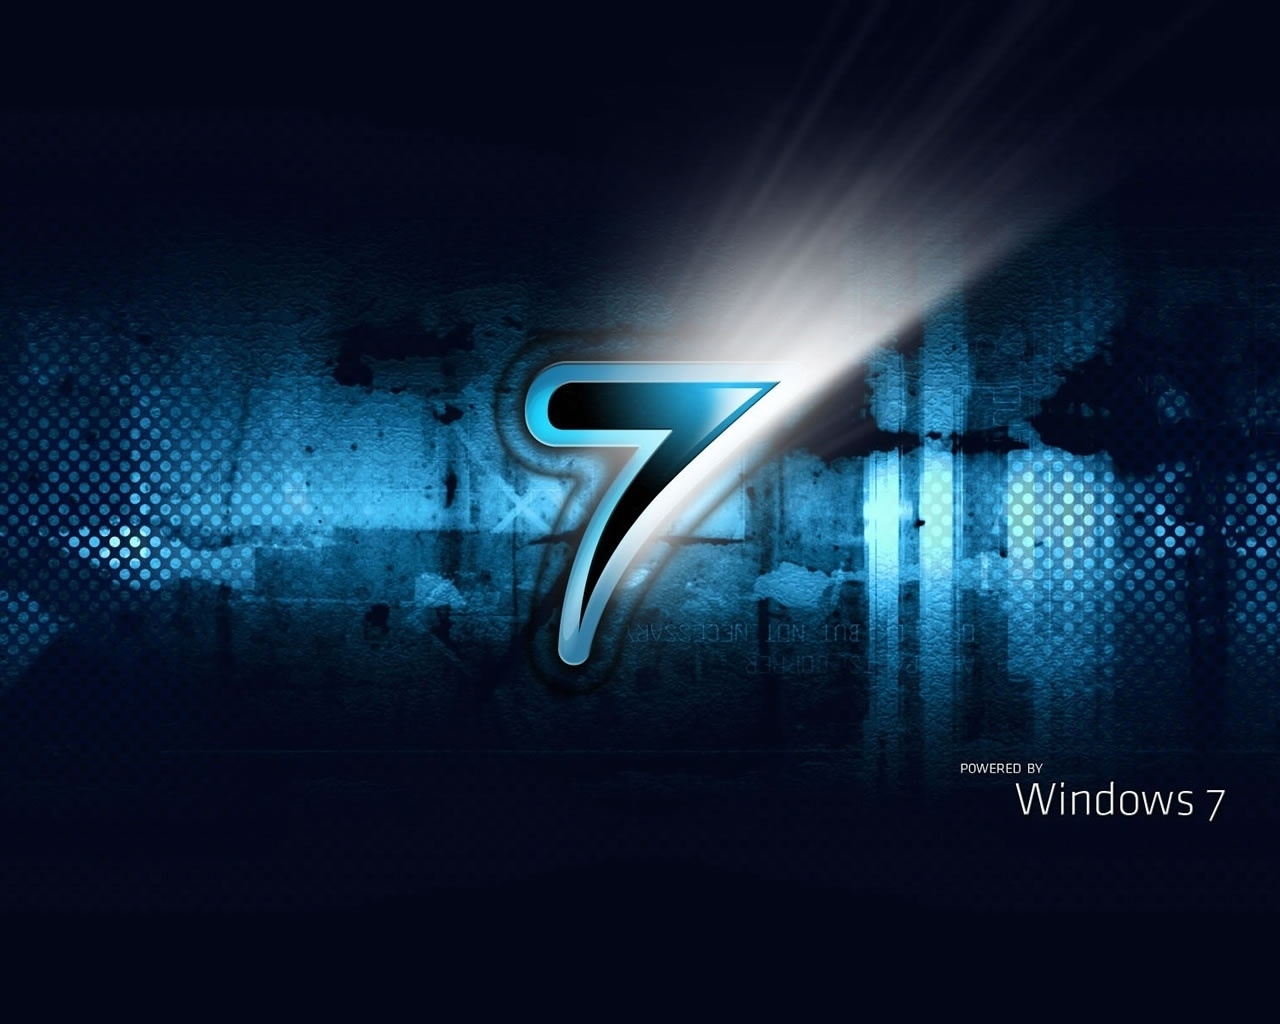 Superb Windows 7 for 1280 x 1024 resolution